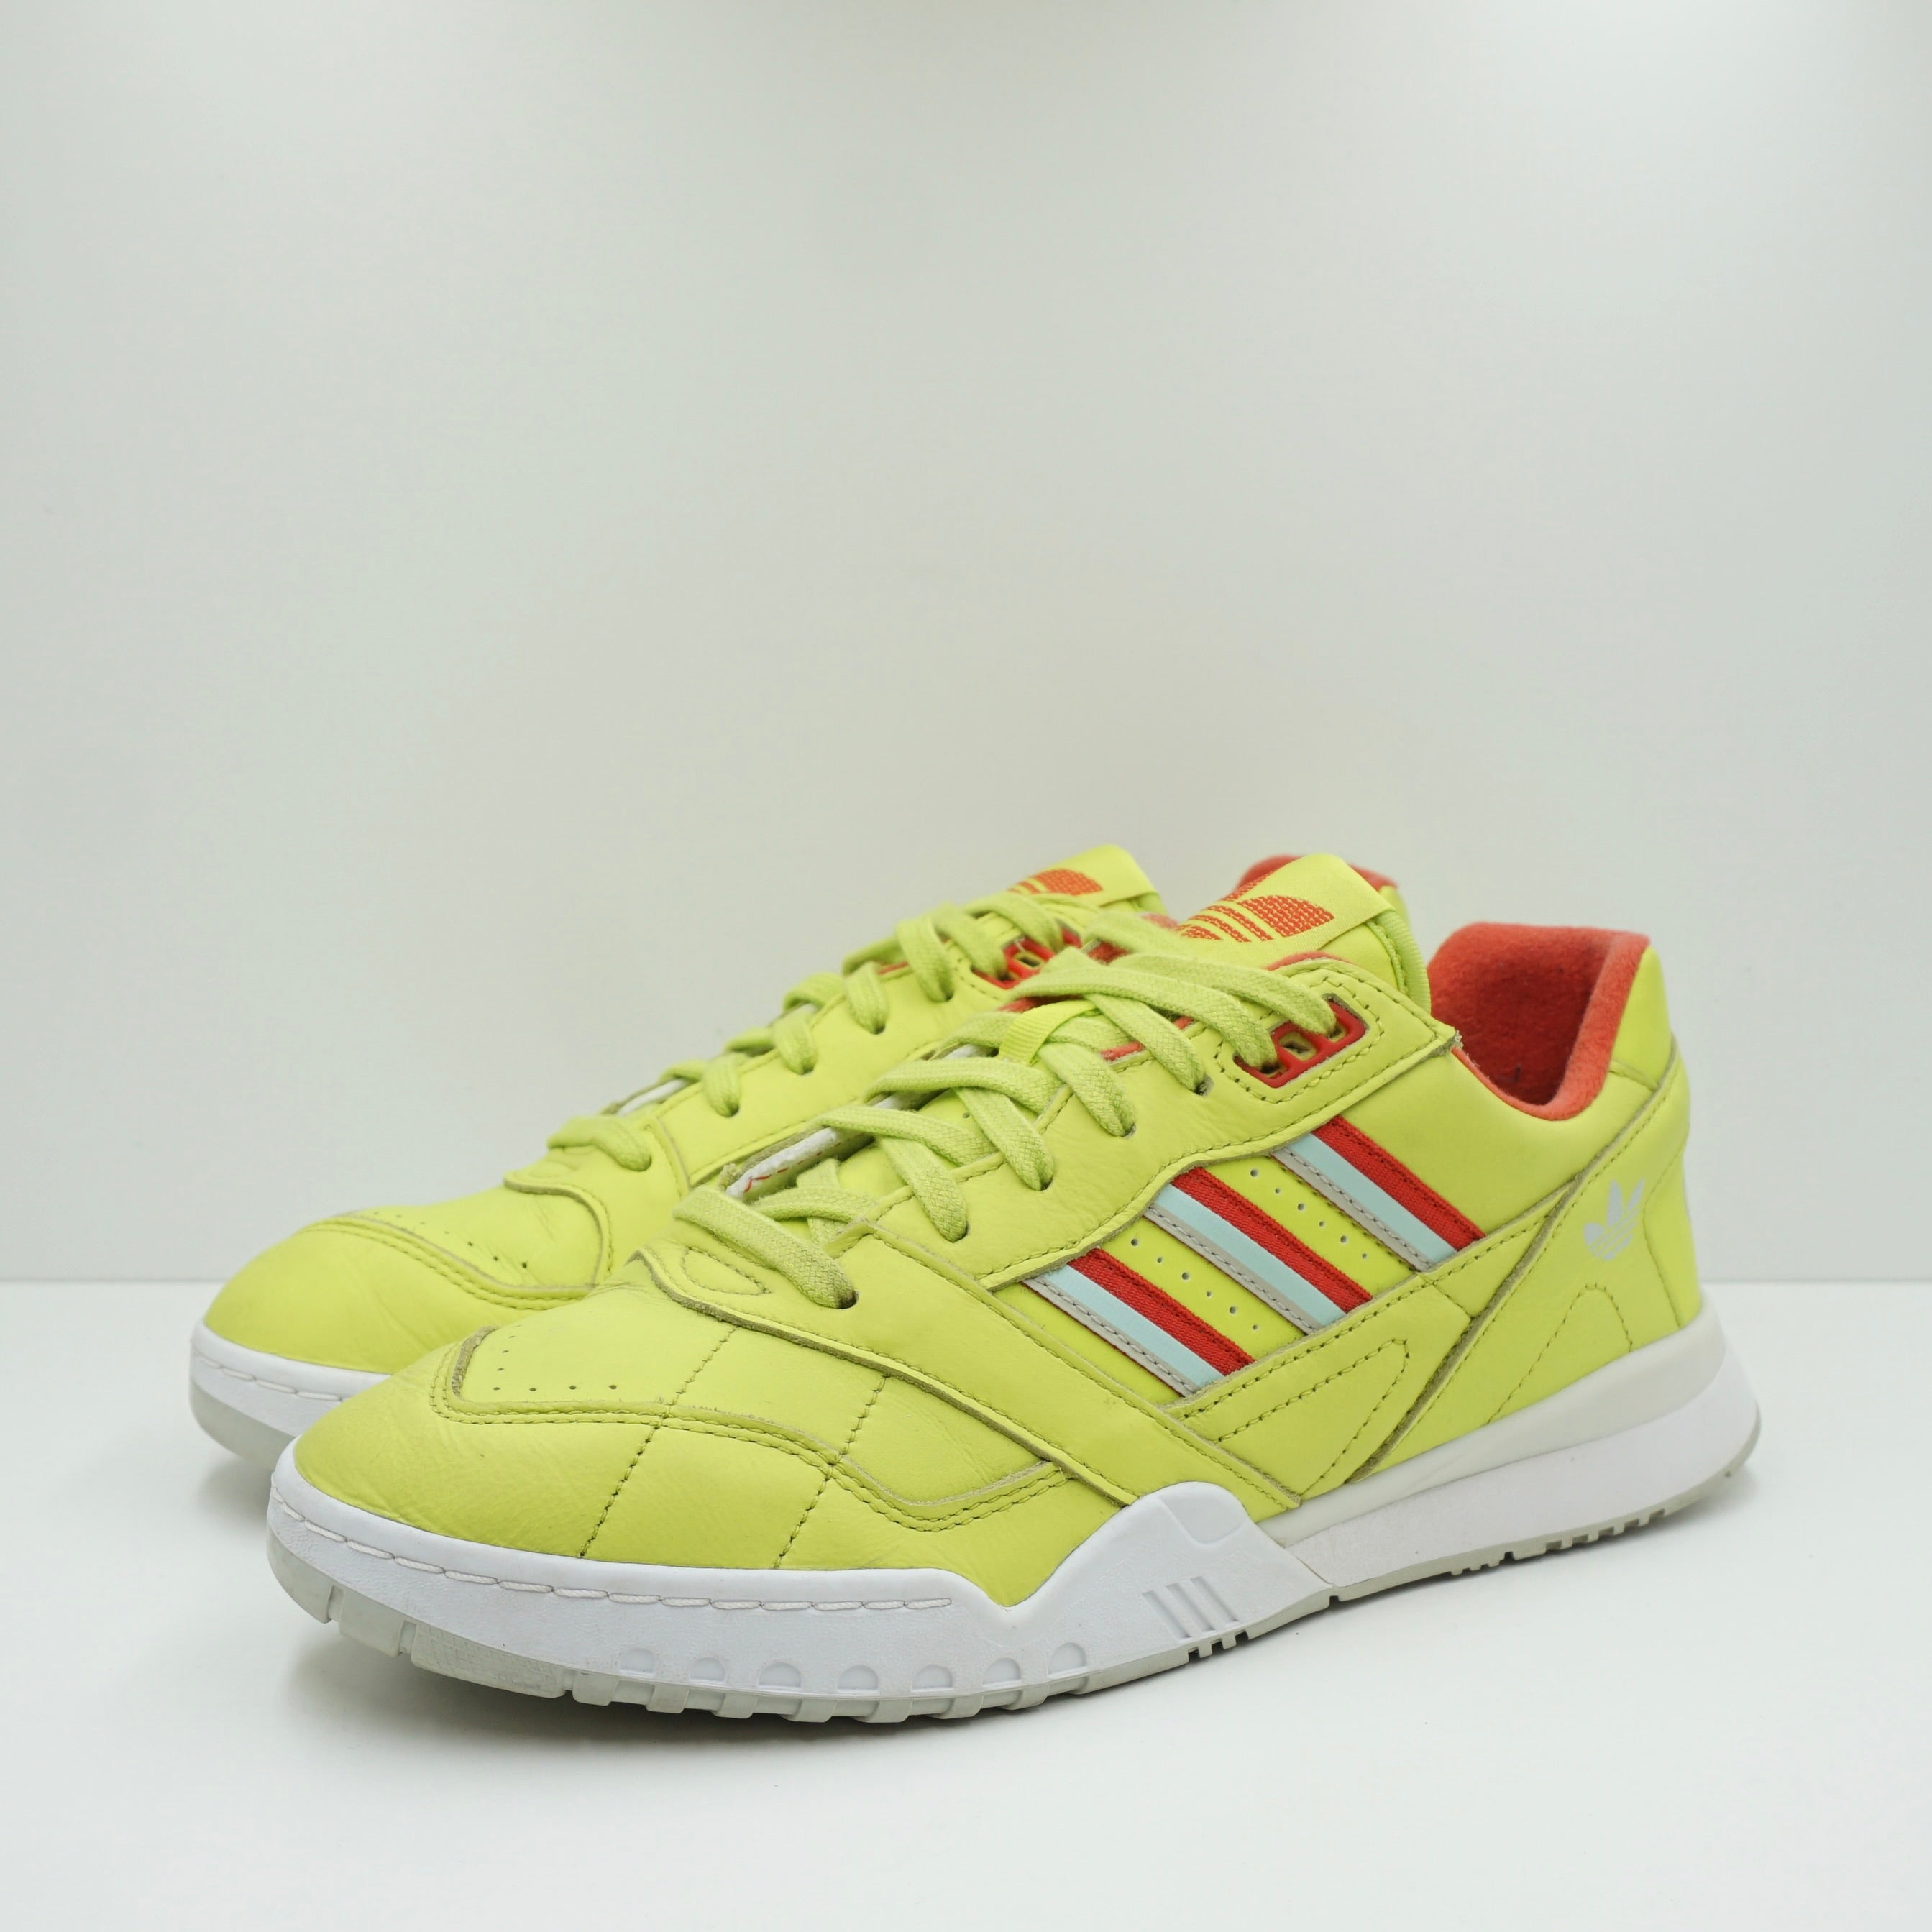 Adidas A.R. Trainer Semi Solar Yellow Lush Red